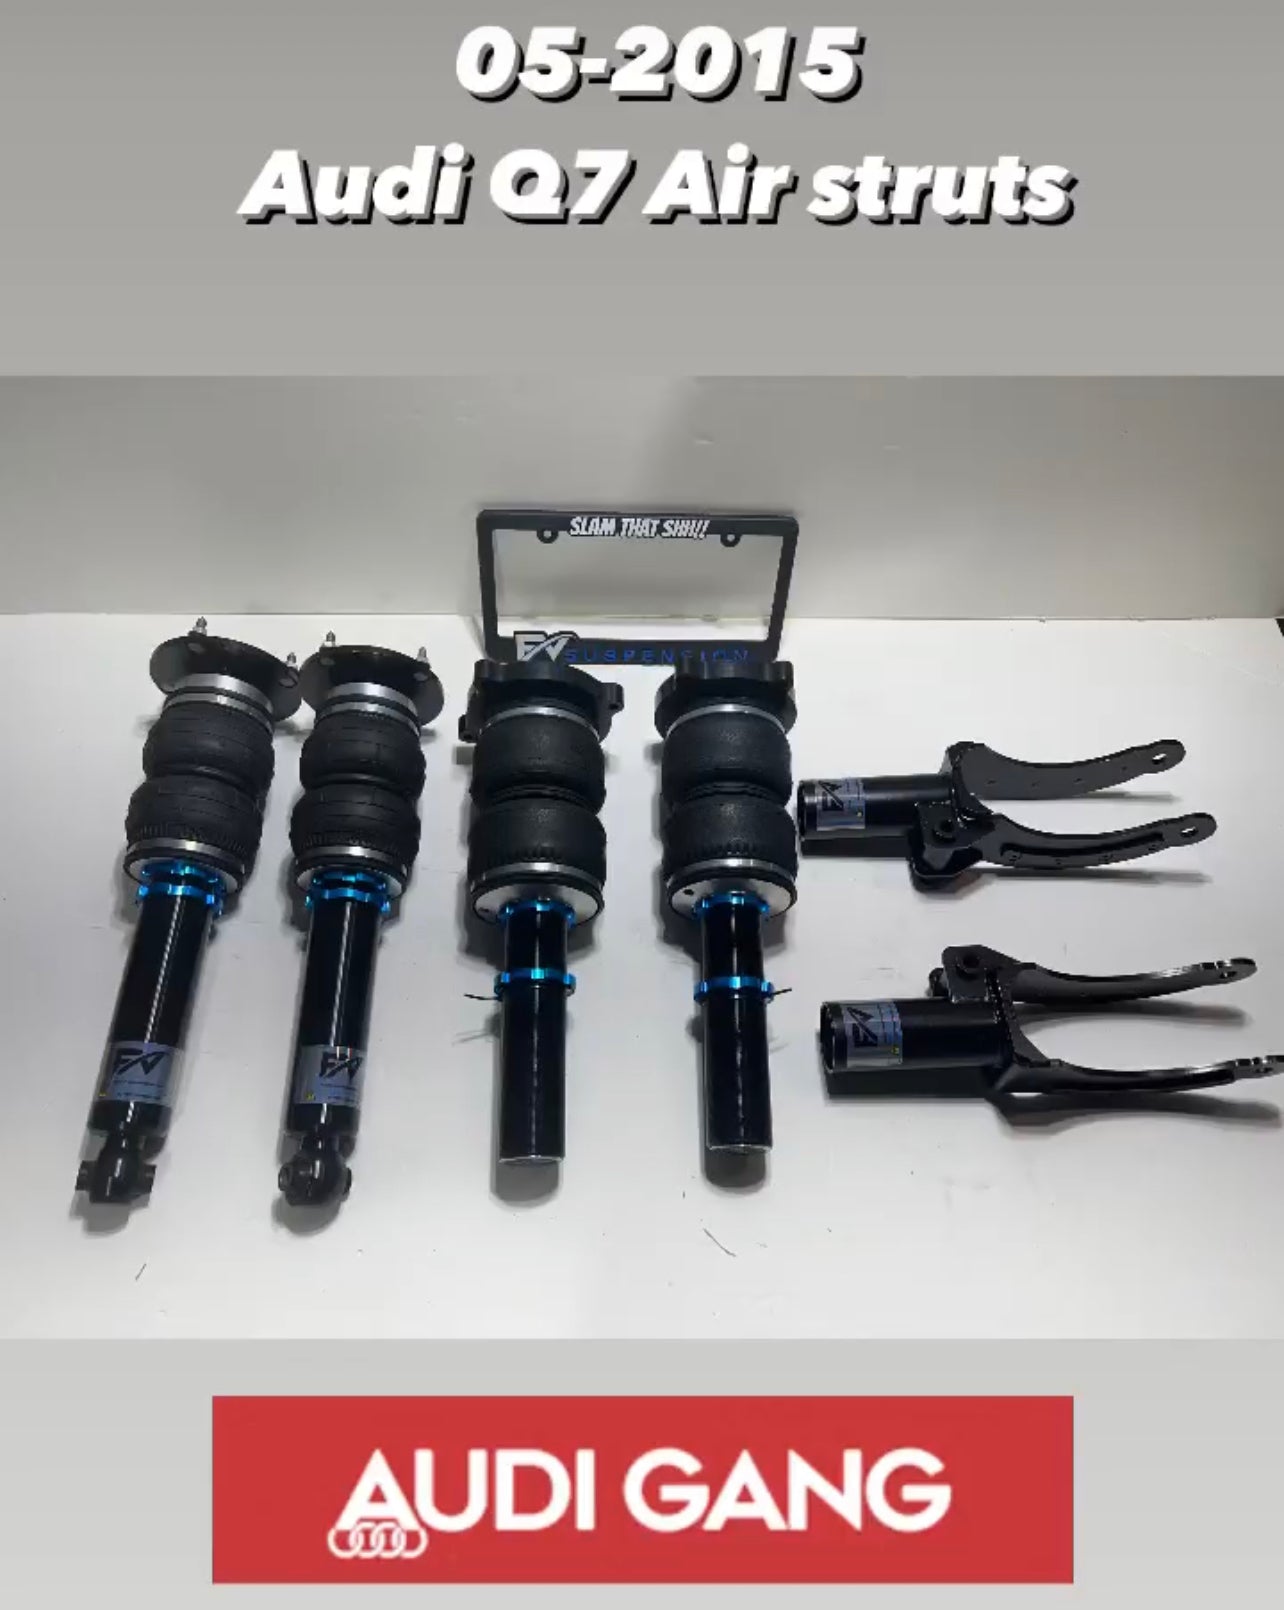 FV Suspension 3H Tier 3 Complete Air Ride kit for 05-15 Audi Q7 - FVALtier3kit74